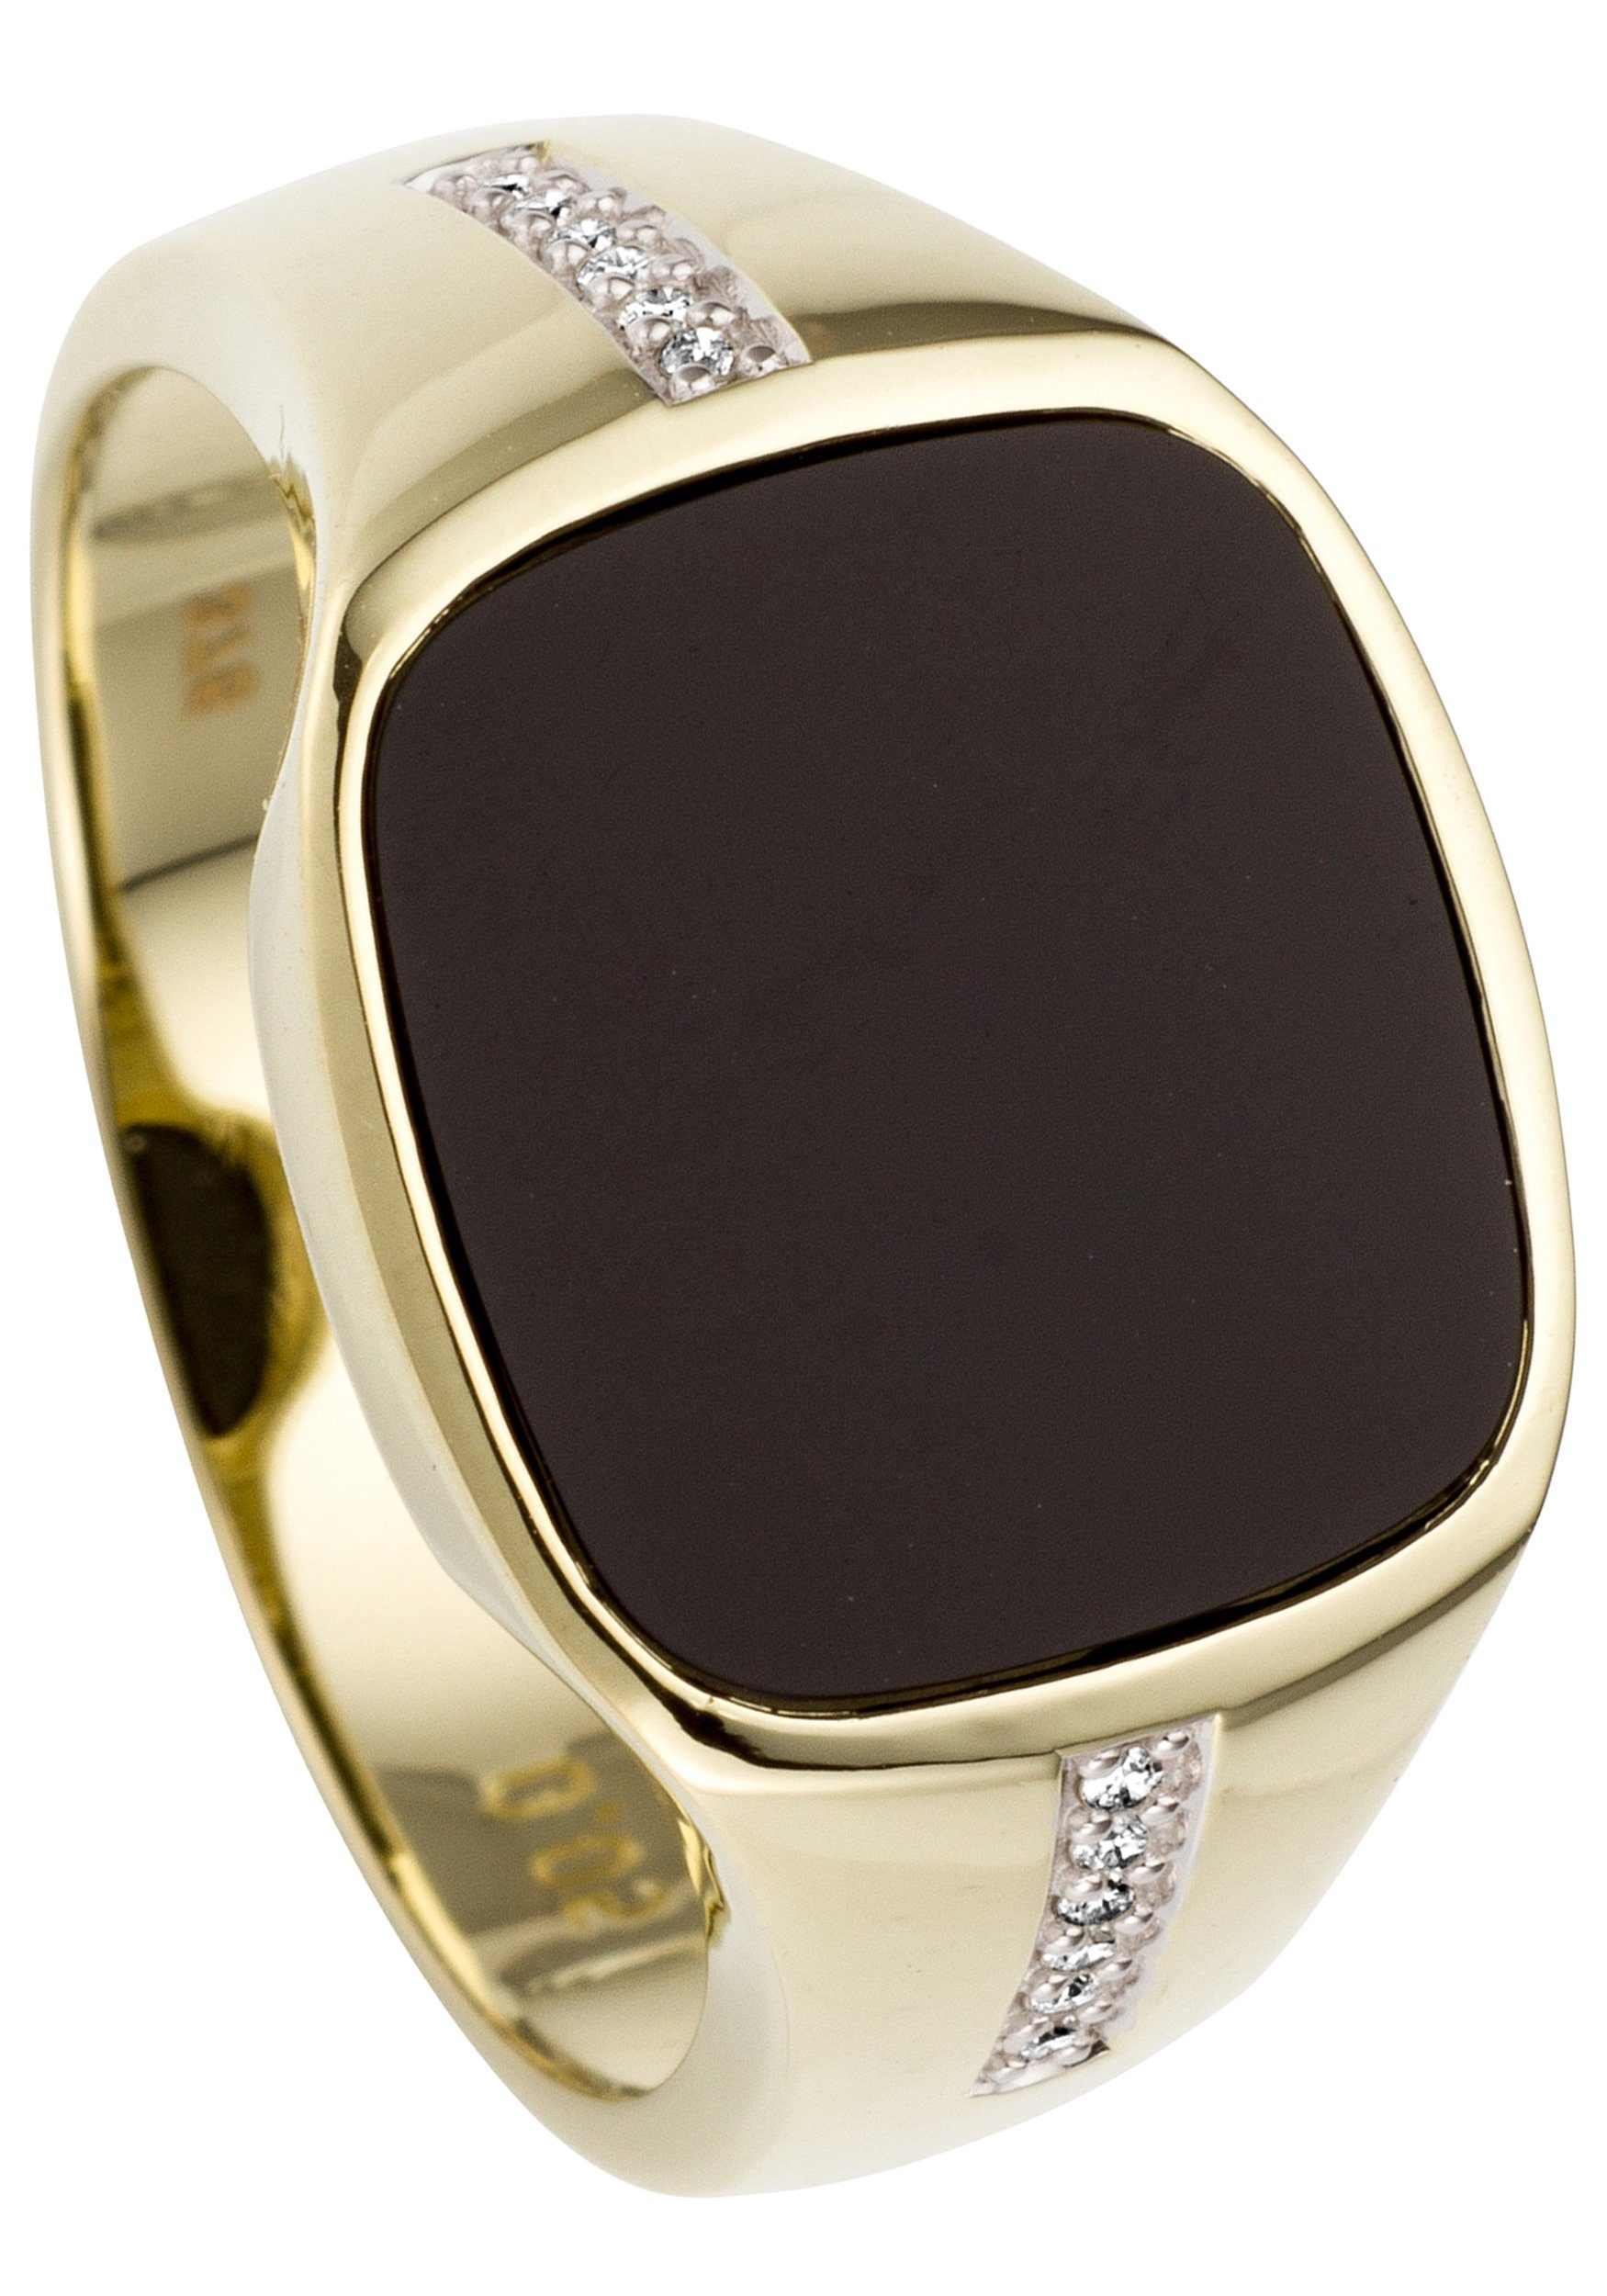 JOBO Fingerring Ring Diamanten, Onyx 12 585 bicolor mit Gold und